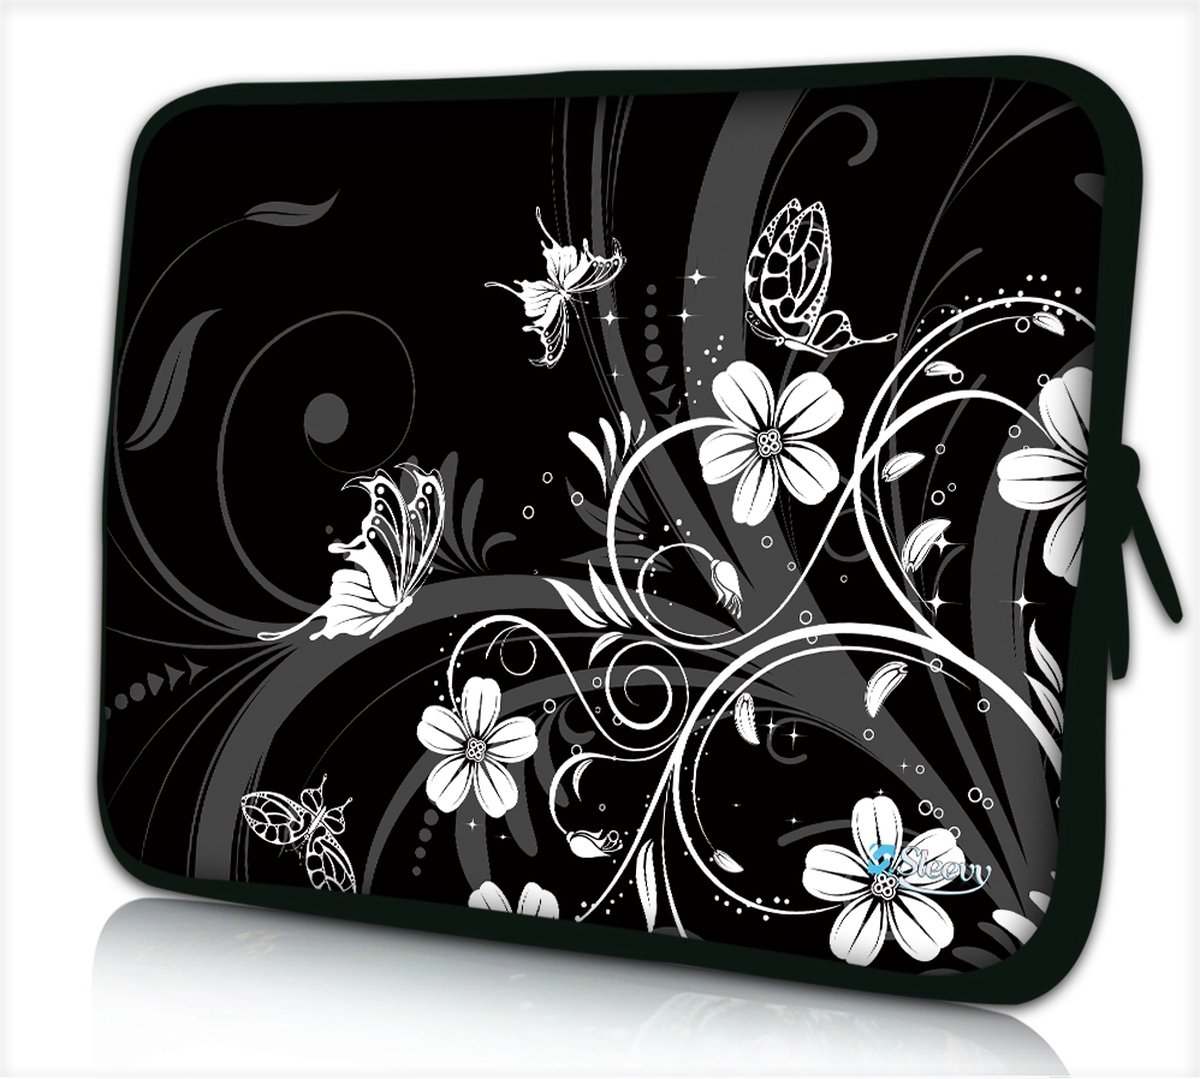 Sleevy 13.3 laptophoes/macbookhoes witte bloemen - laptop sleeve - Sleevy collectie 300+ designs